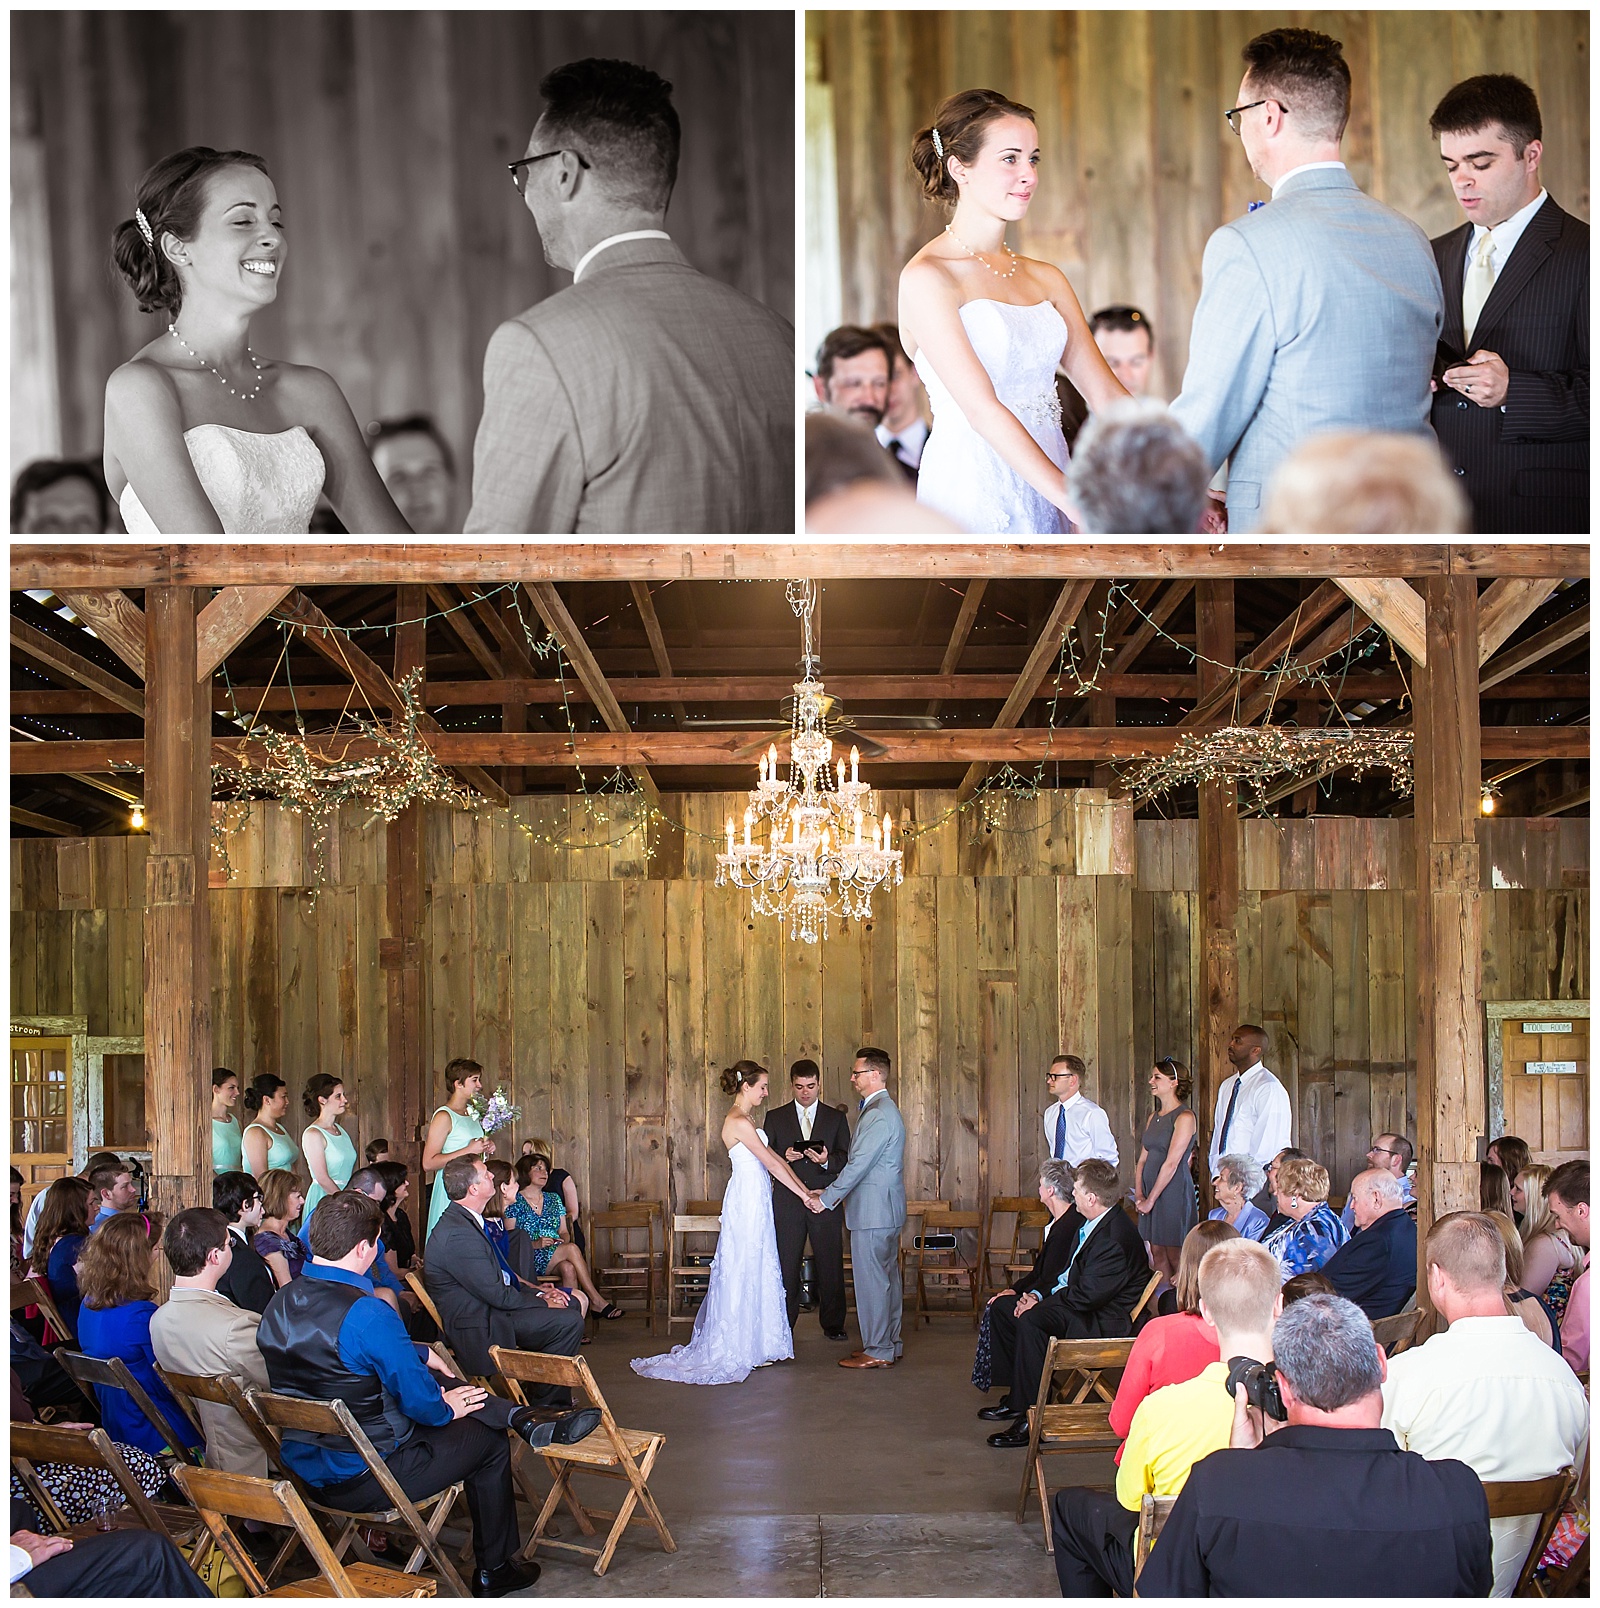 Wedding photography at Weston Red Barn Farm in Weston, Missouri.